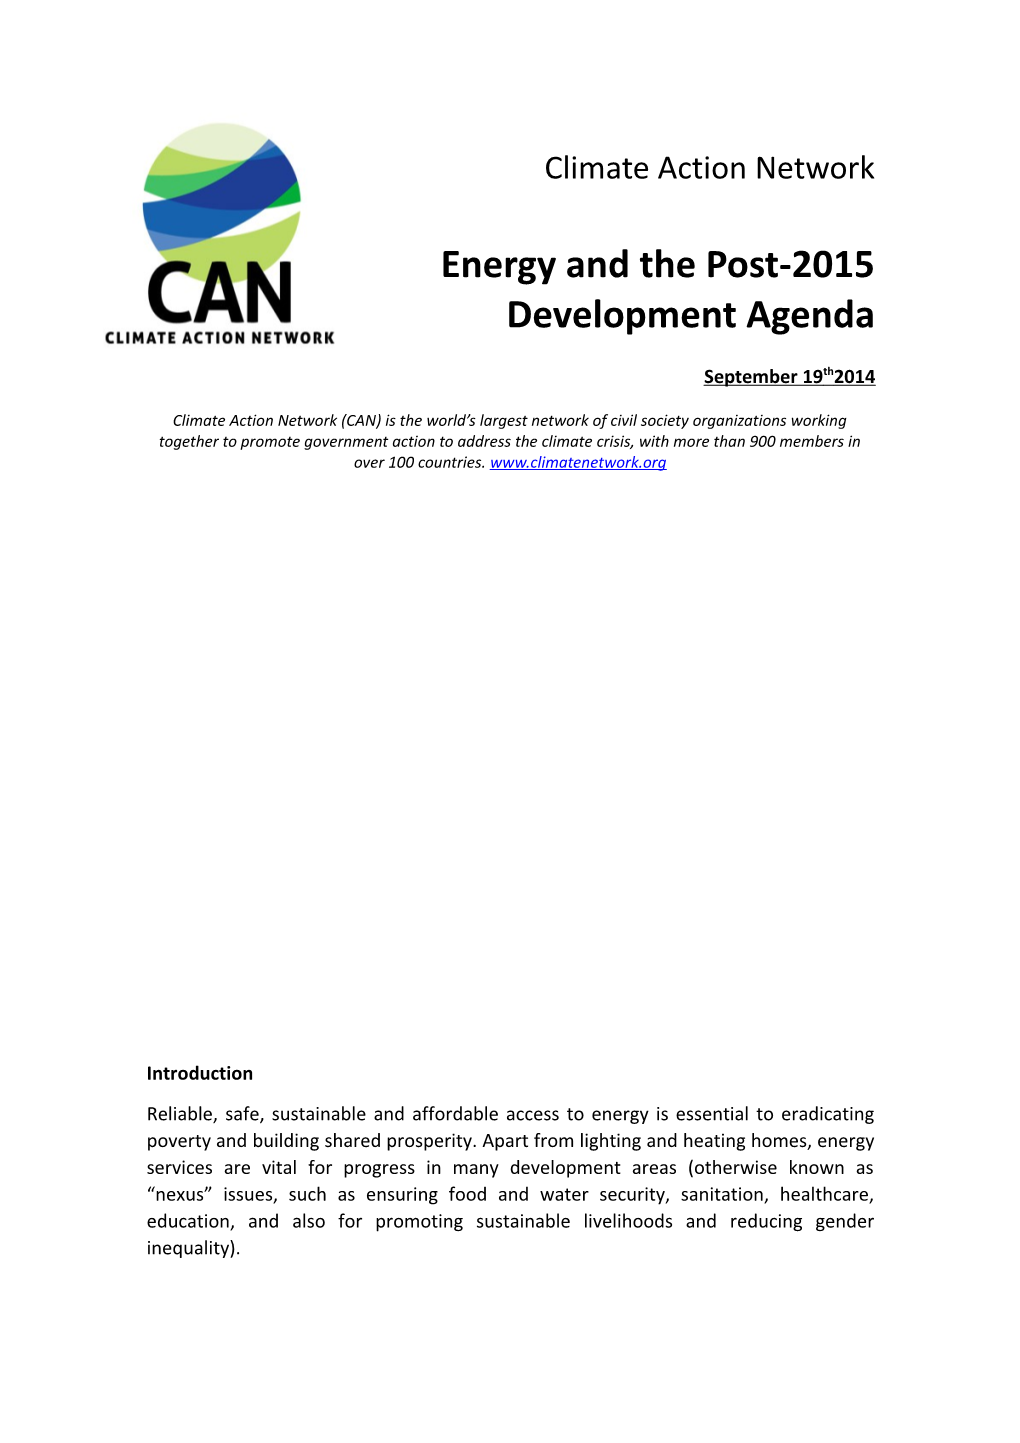 Energy and the Post-2015 Development Agenda